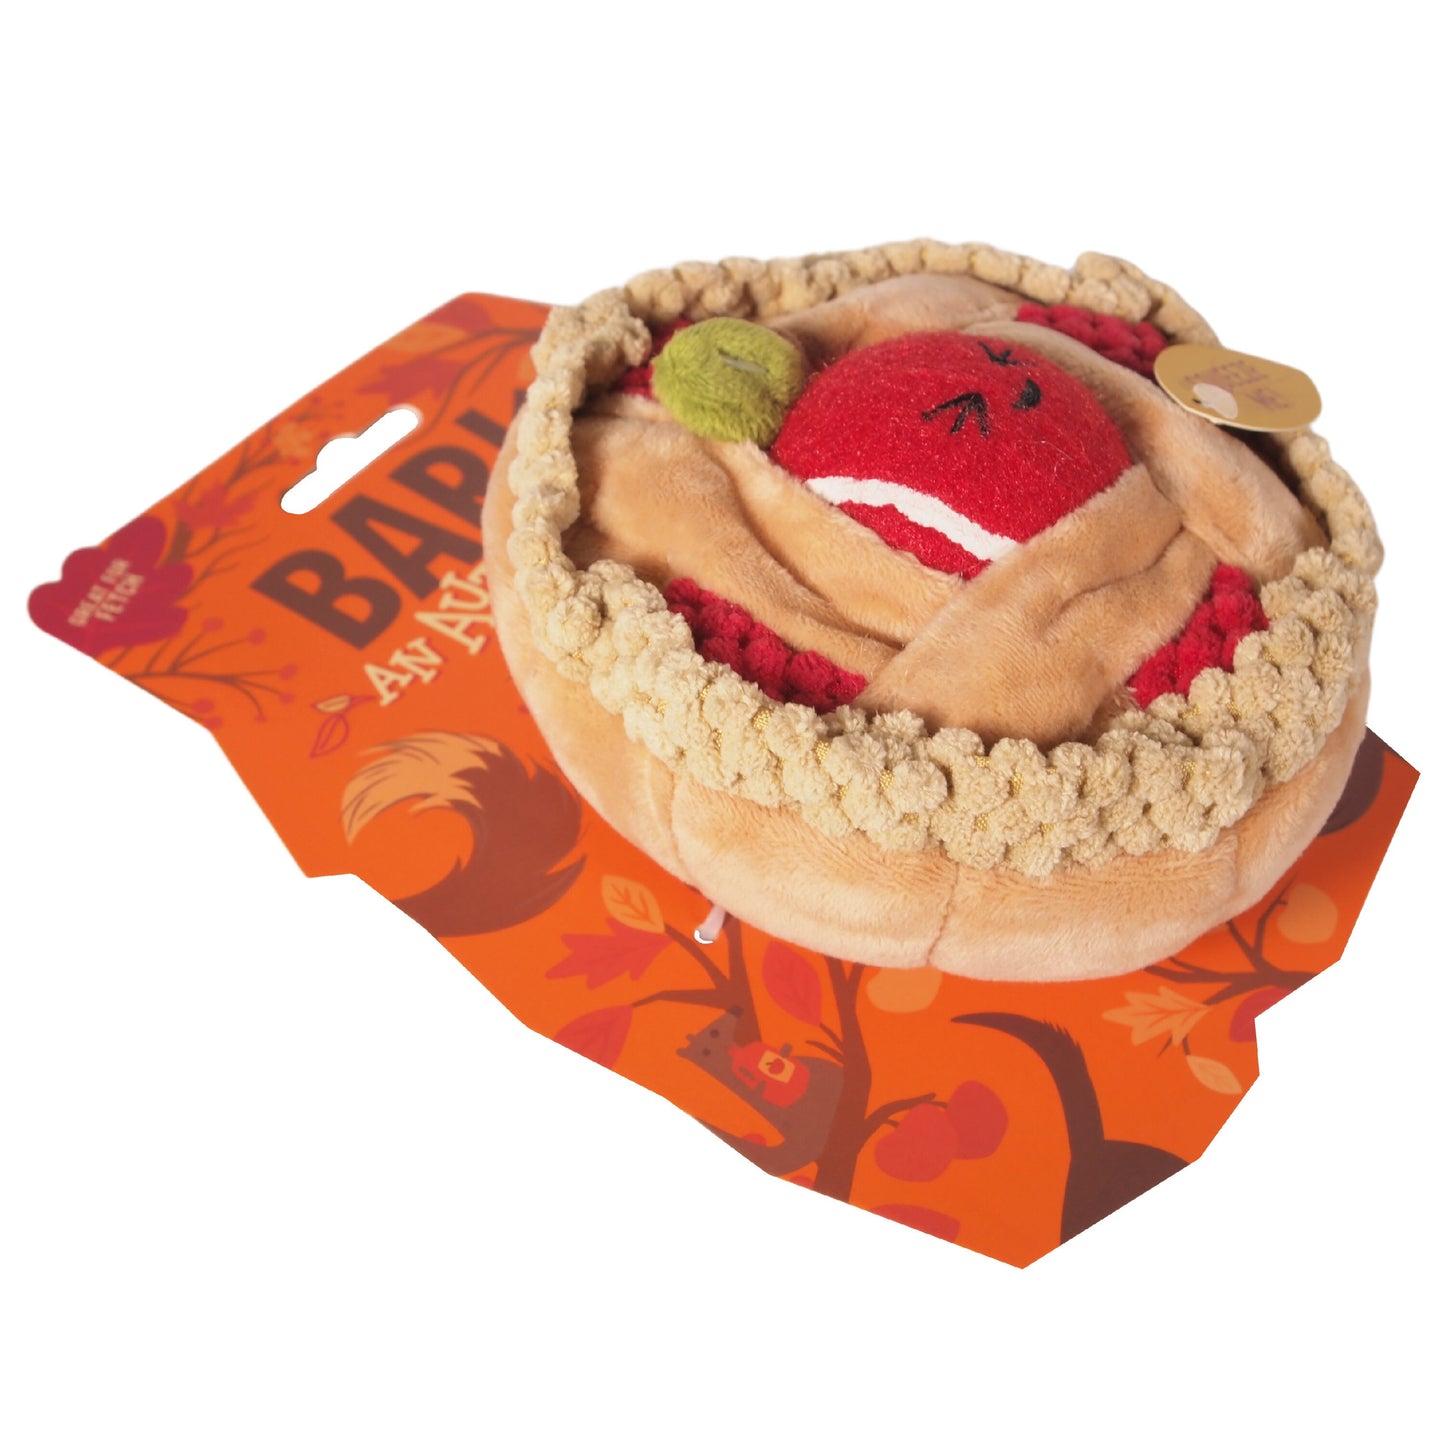 Stuffed Apple Pie Dog Toy - Thanksgiving/Fall Fun! - 2 Toys in 1